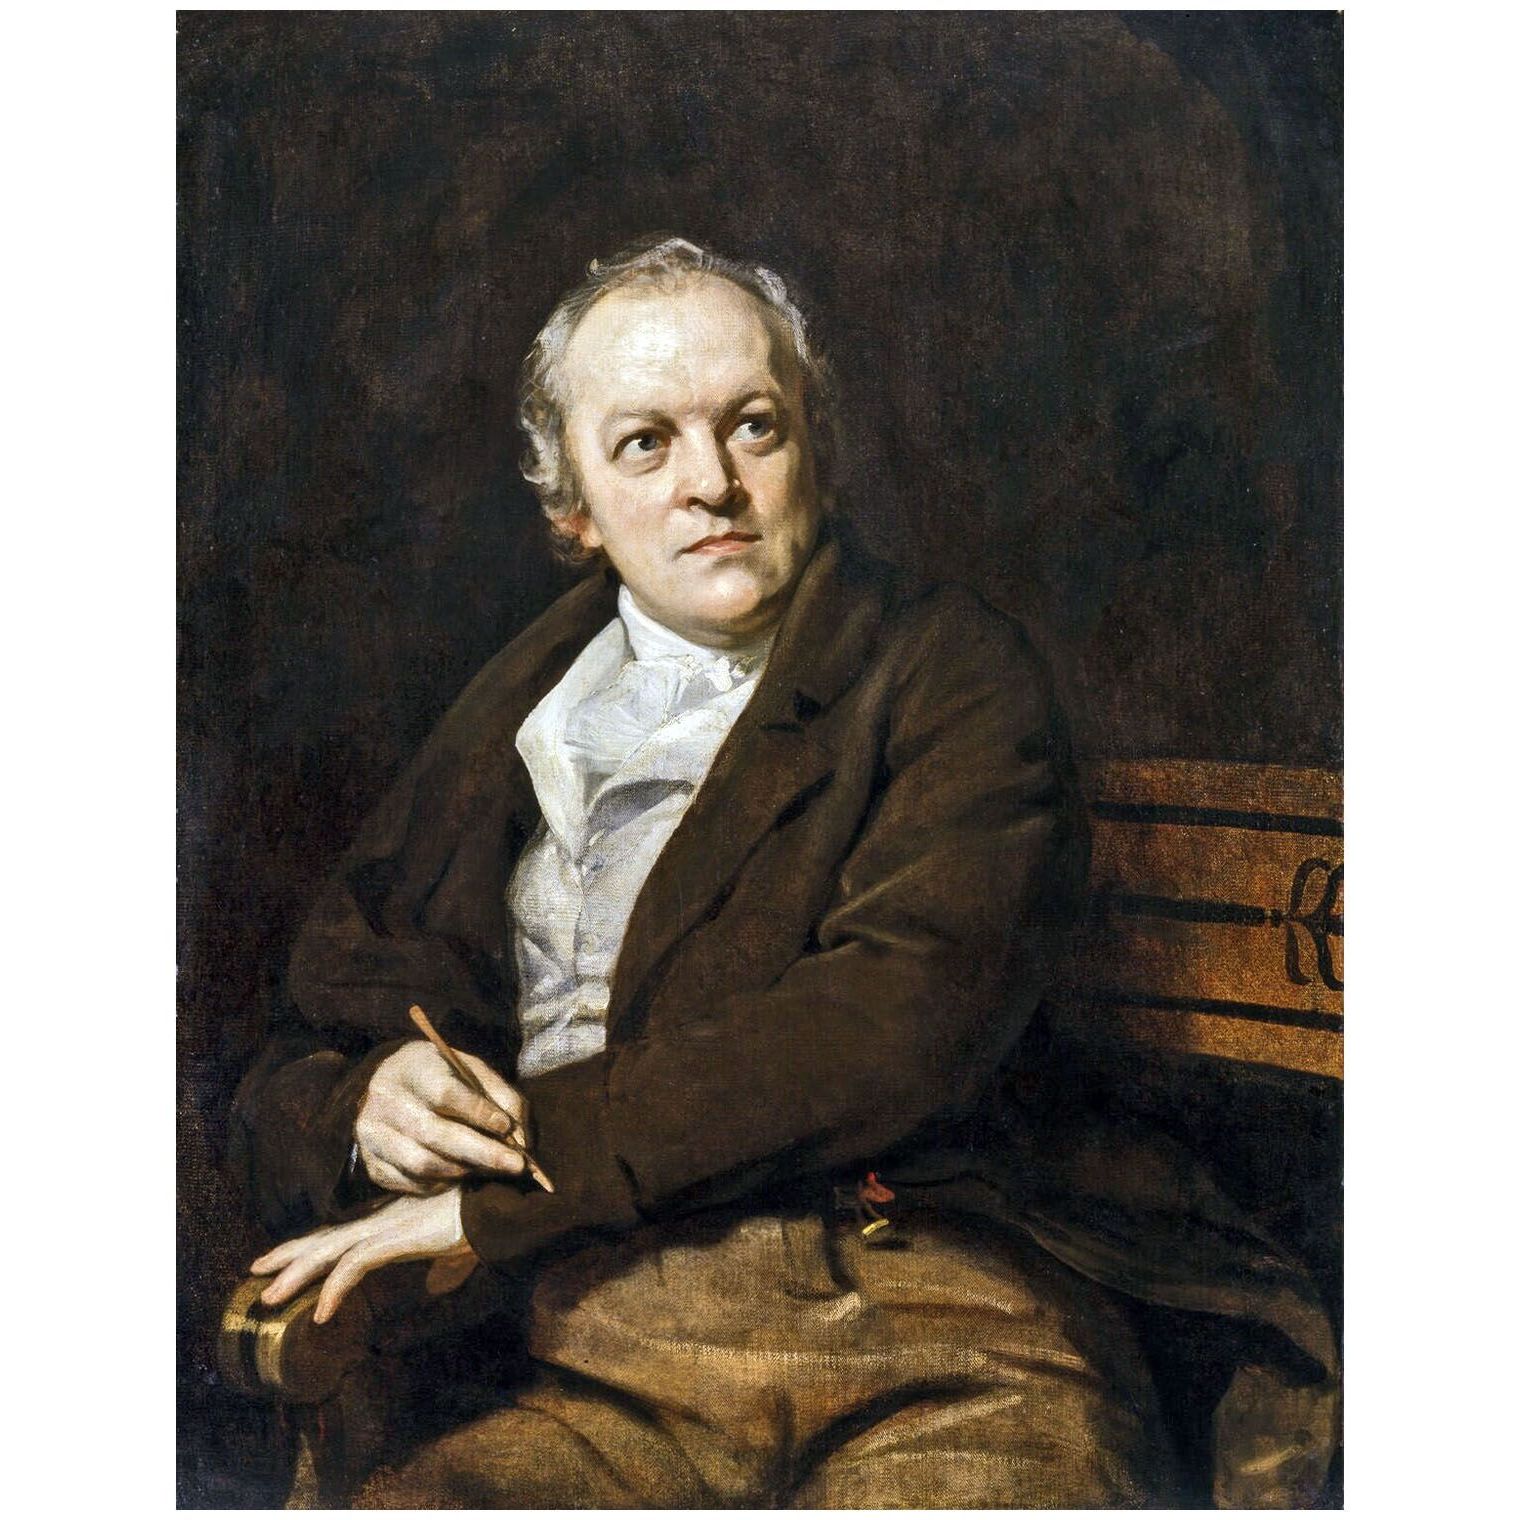 Thomas Phillips. Portrait of William Blake. 1807. National Portrait Gallery London